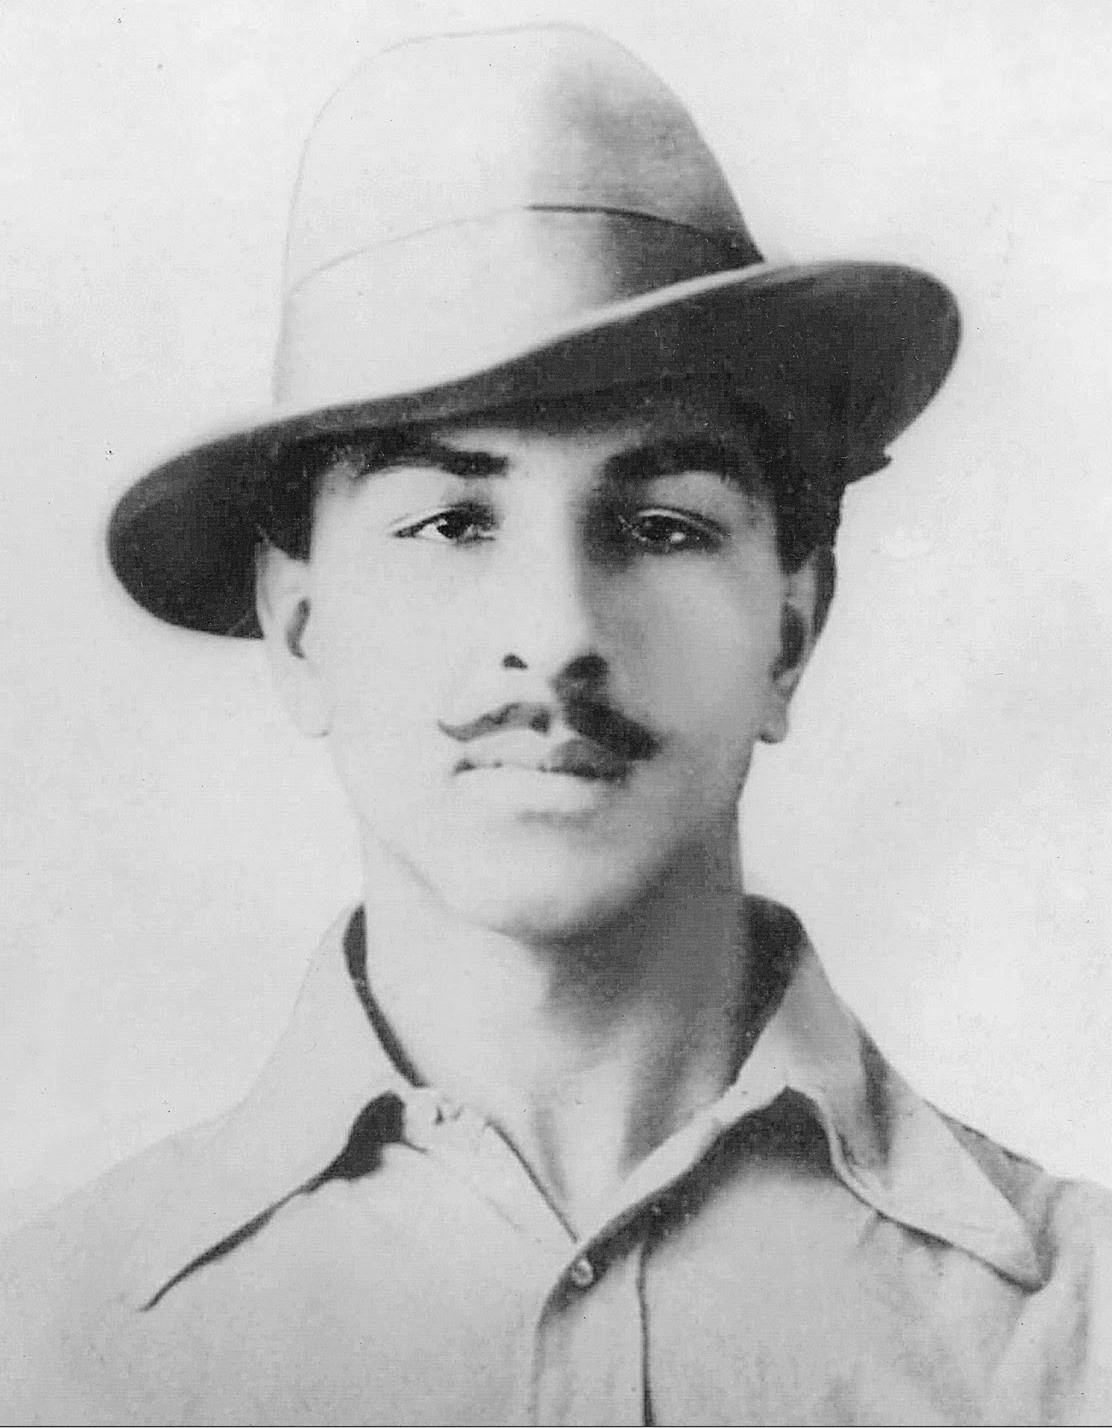 Philosophy of Bhagat Singh: Why I am an Atheist